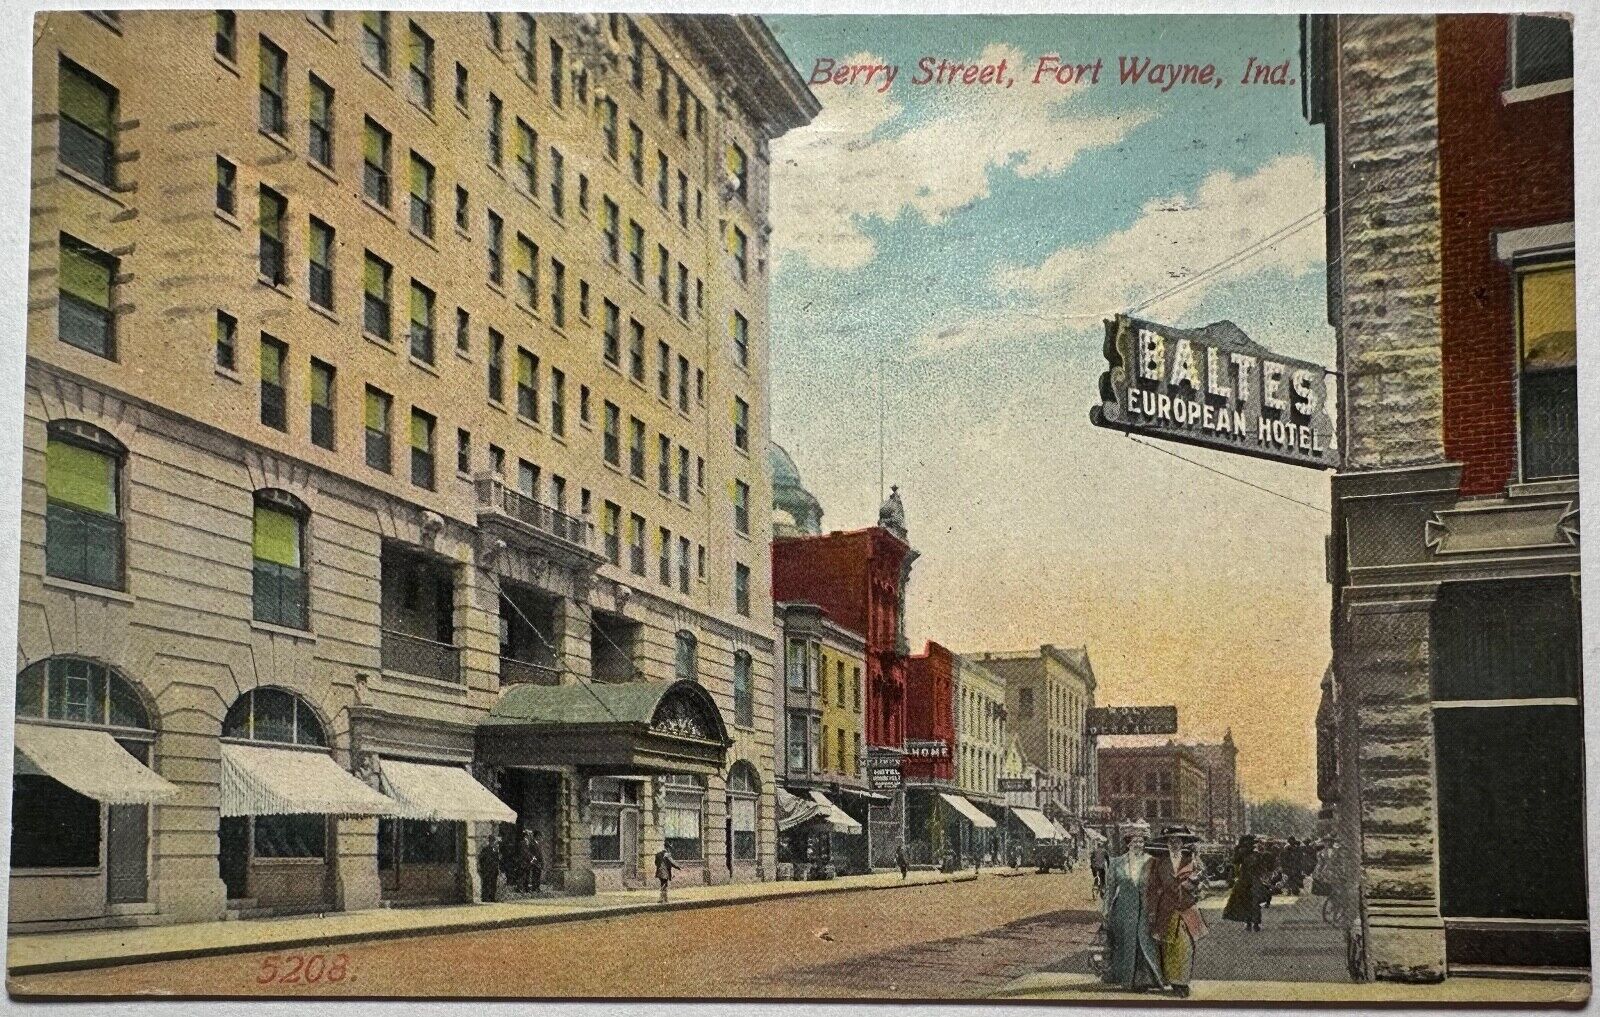 Fort Wayne Indiana Berry Street Baltes European Hotel Postcard c1900s